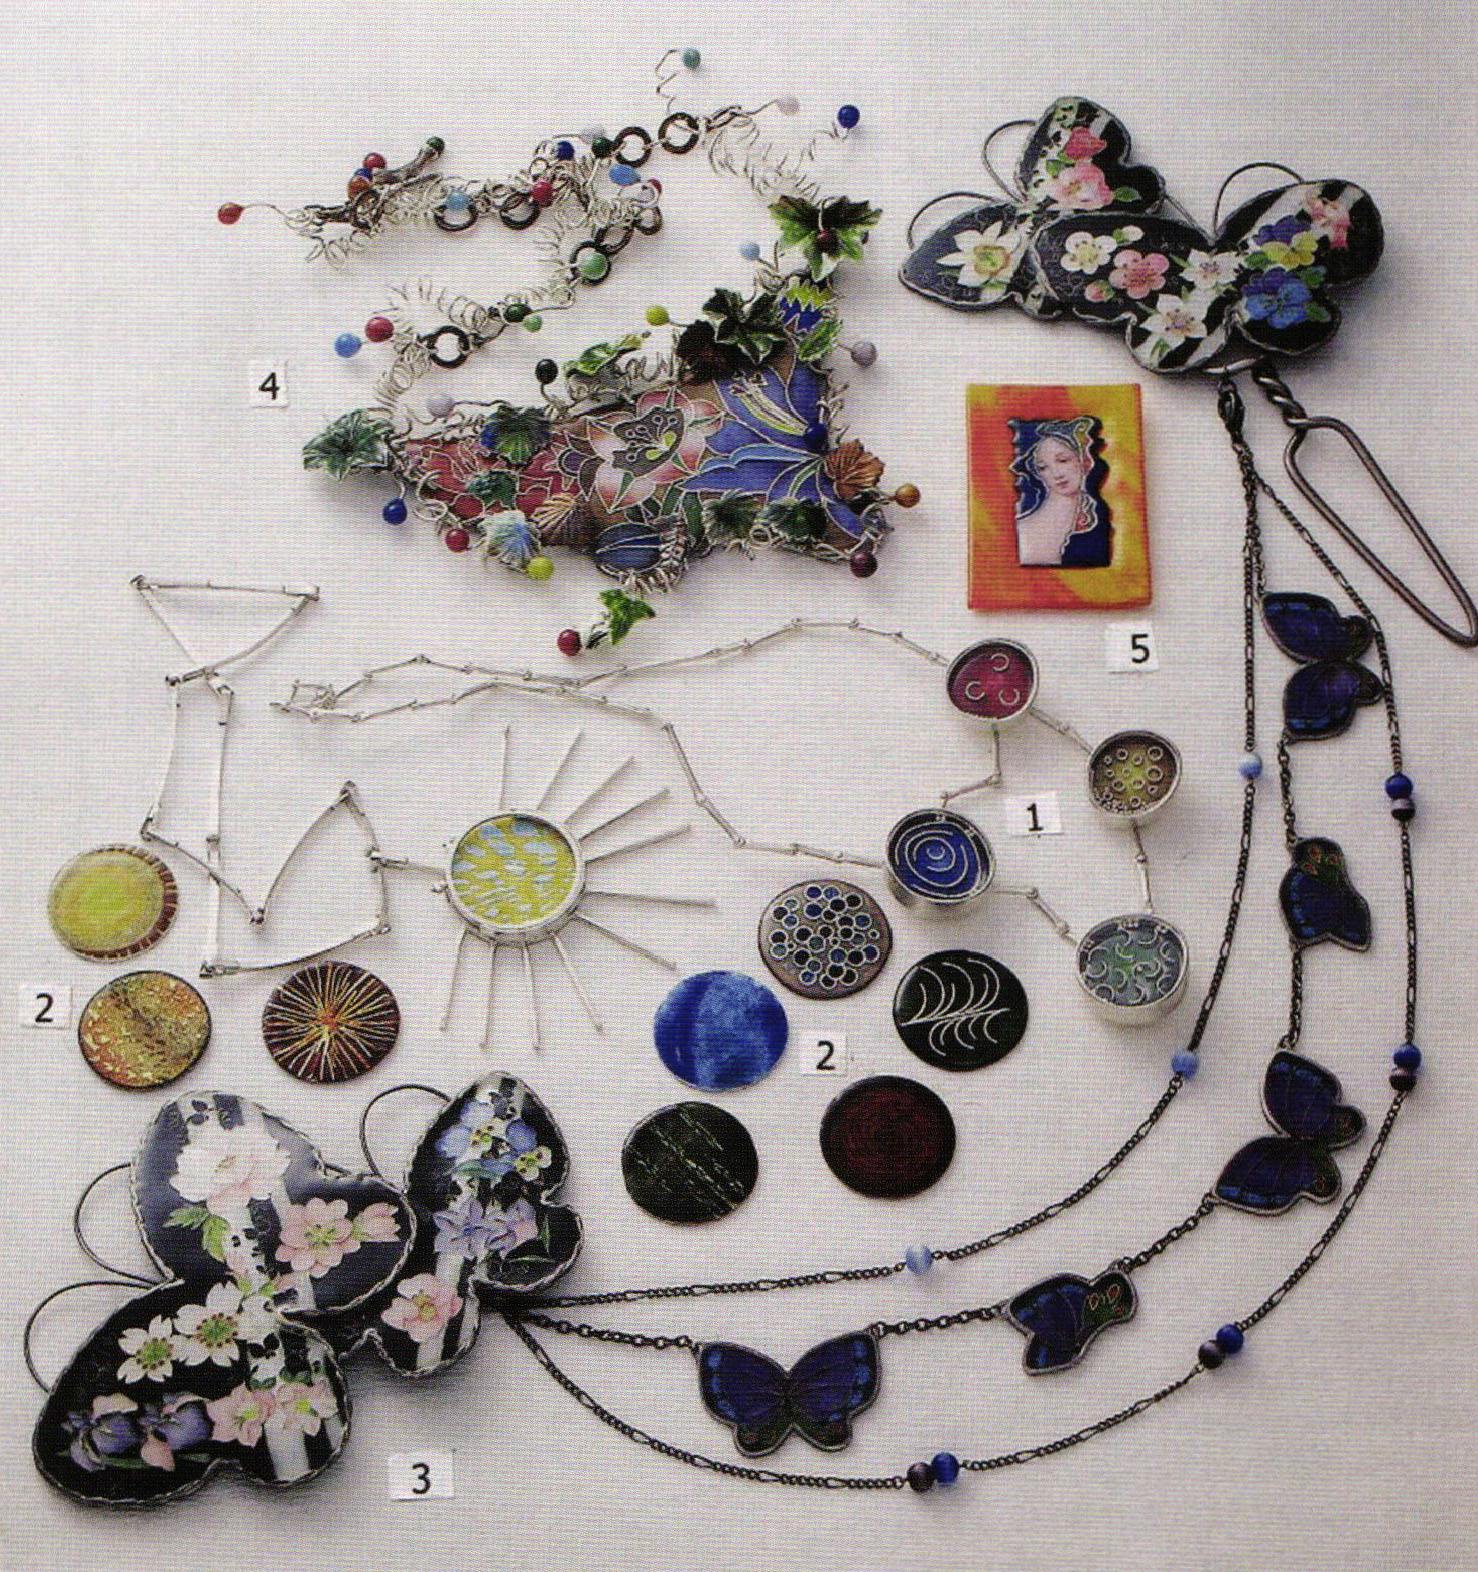 21st International Cloisonne Jewelry Contest 2008